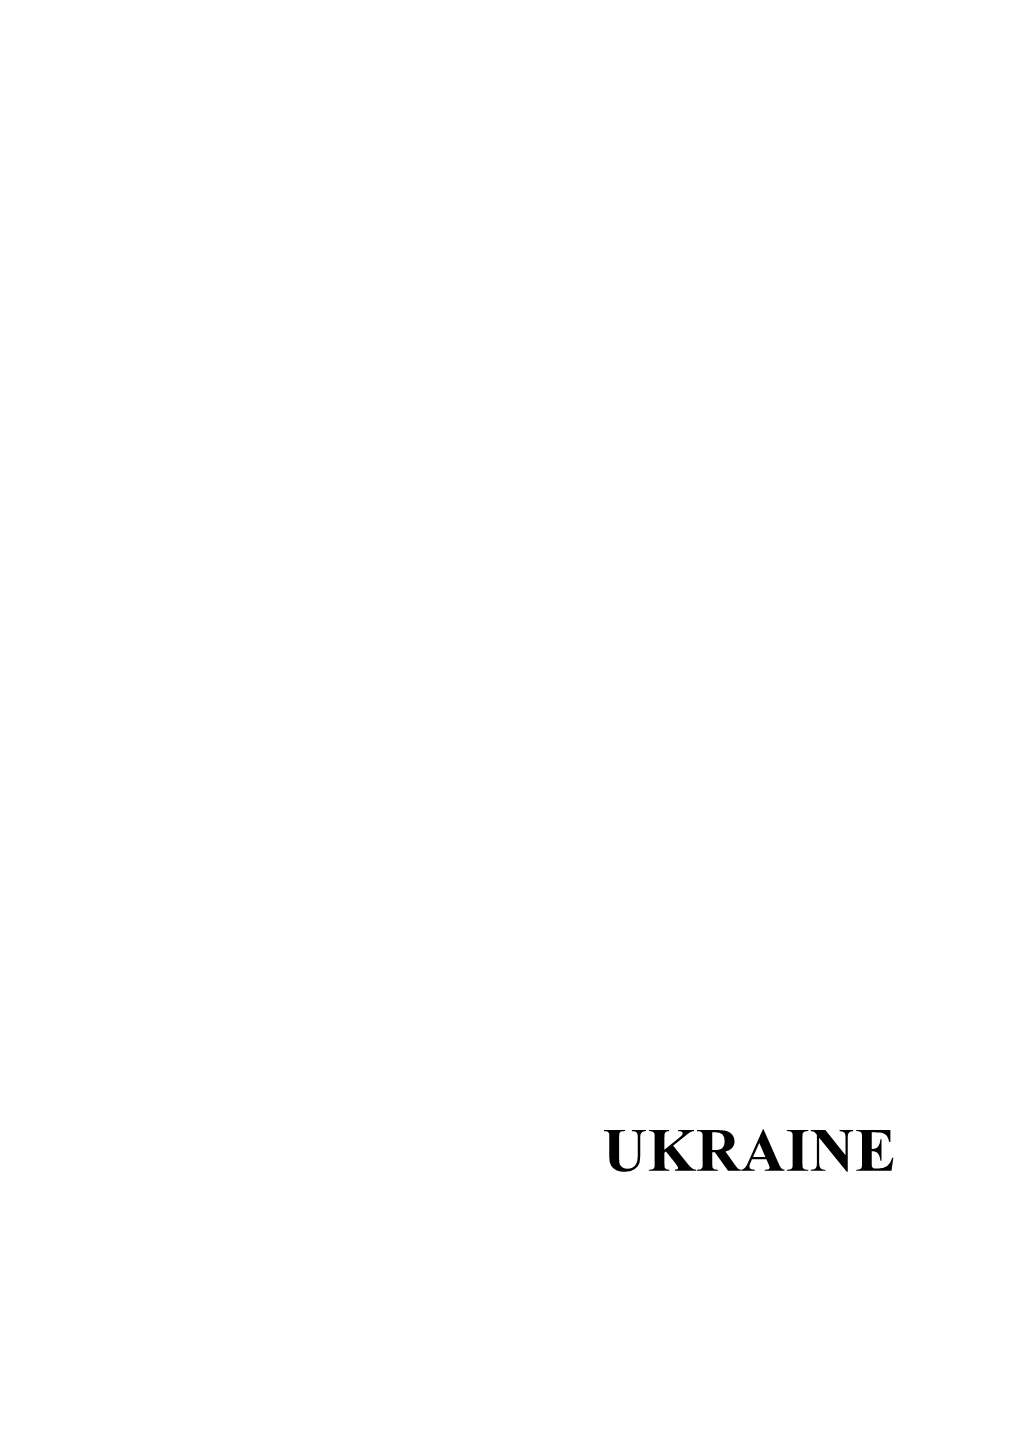 Ukraine 782 Ukraine Ukraine